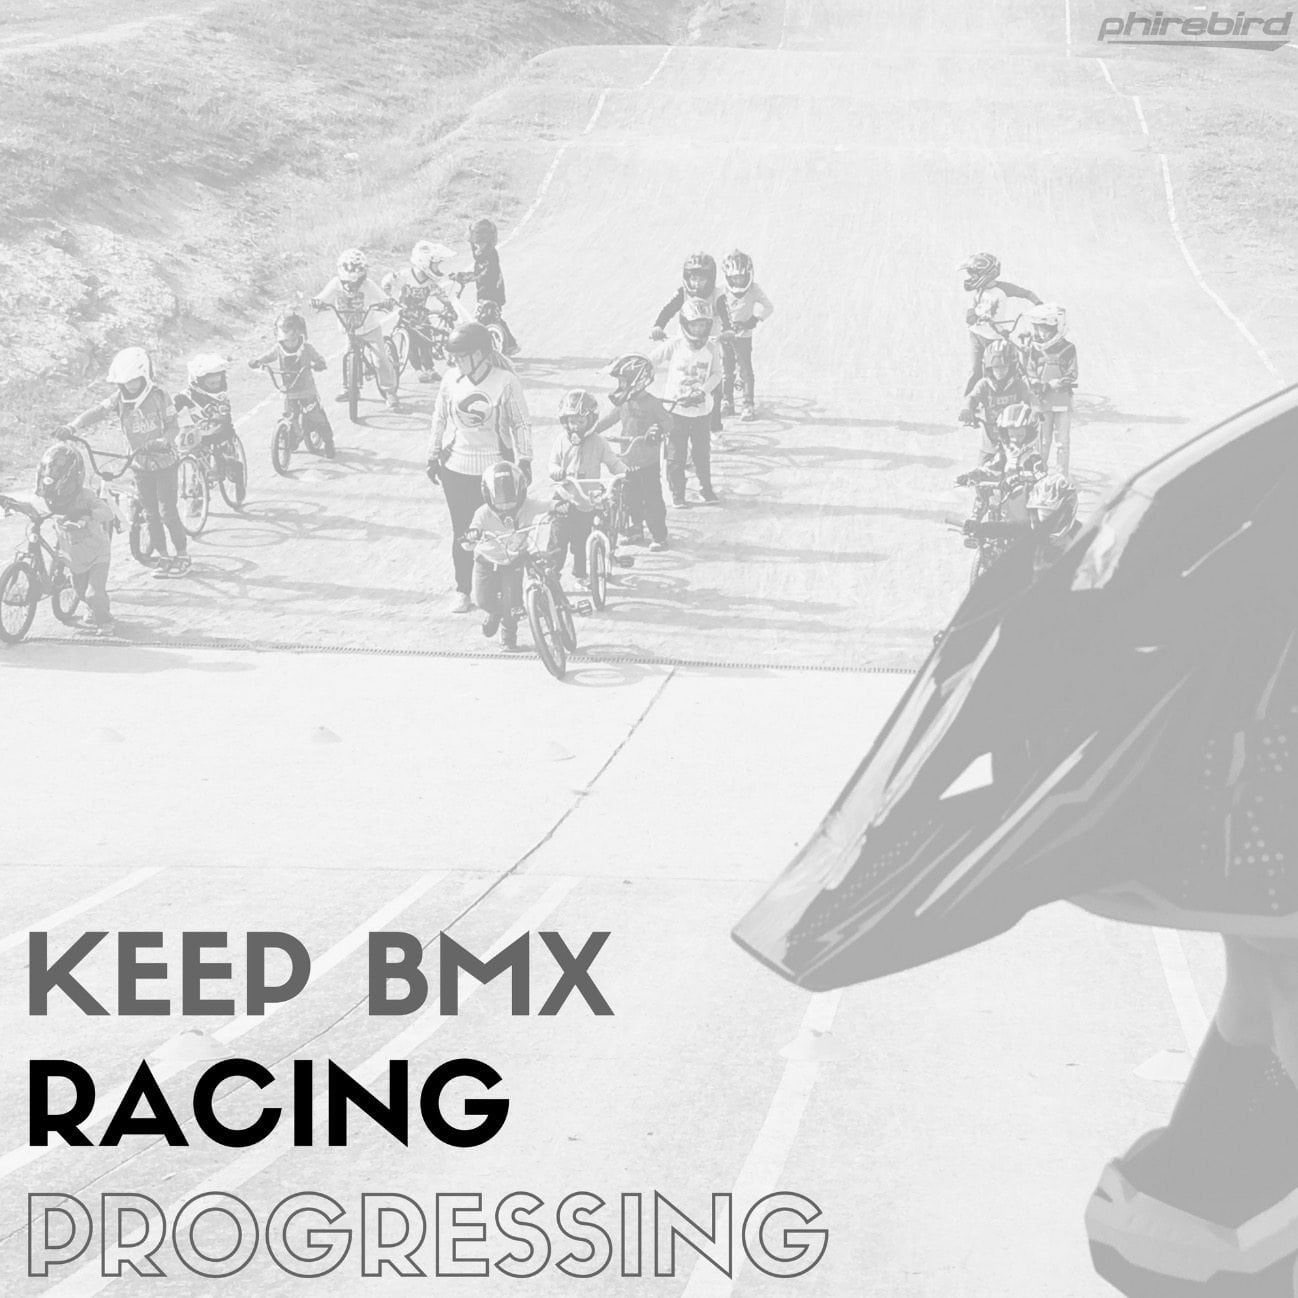 Keep BMX Racing Progressing Phirebird BMX Volunteers -